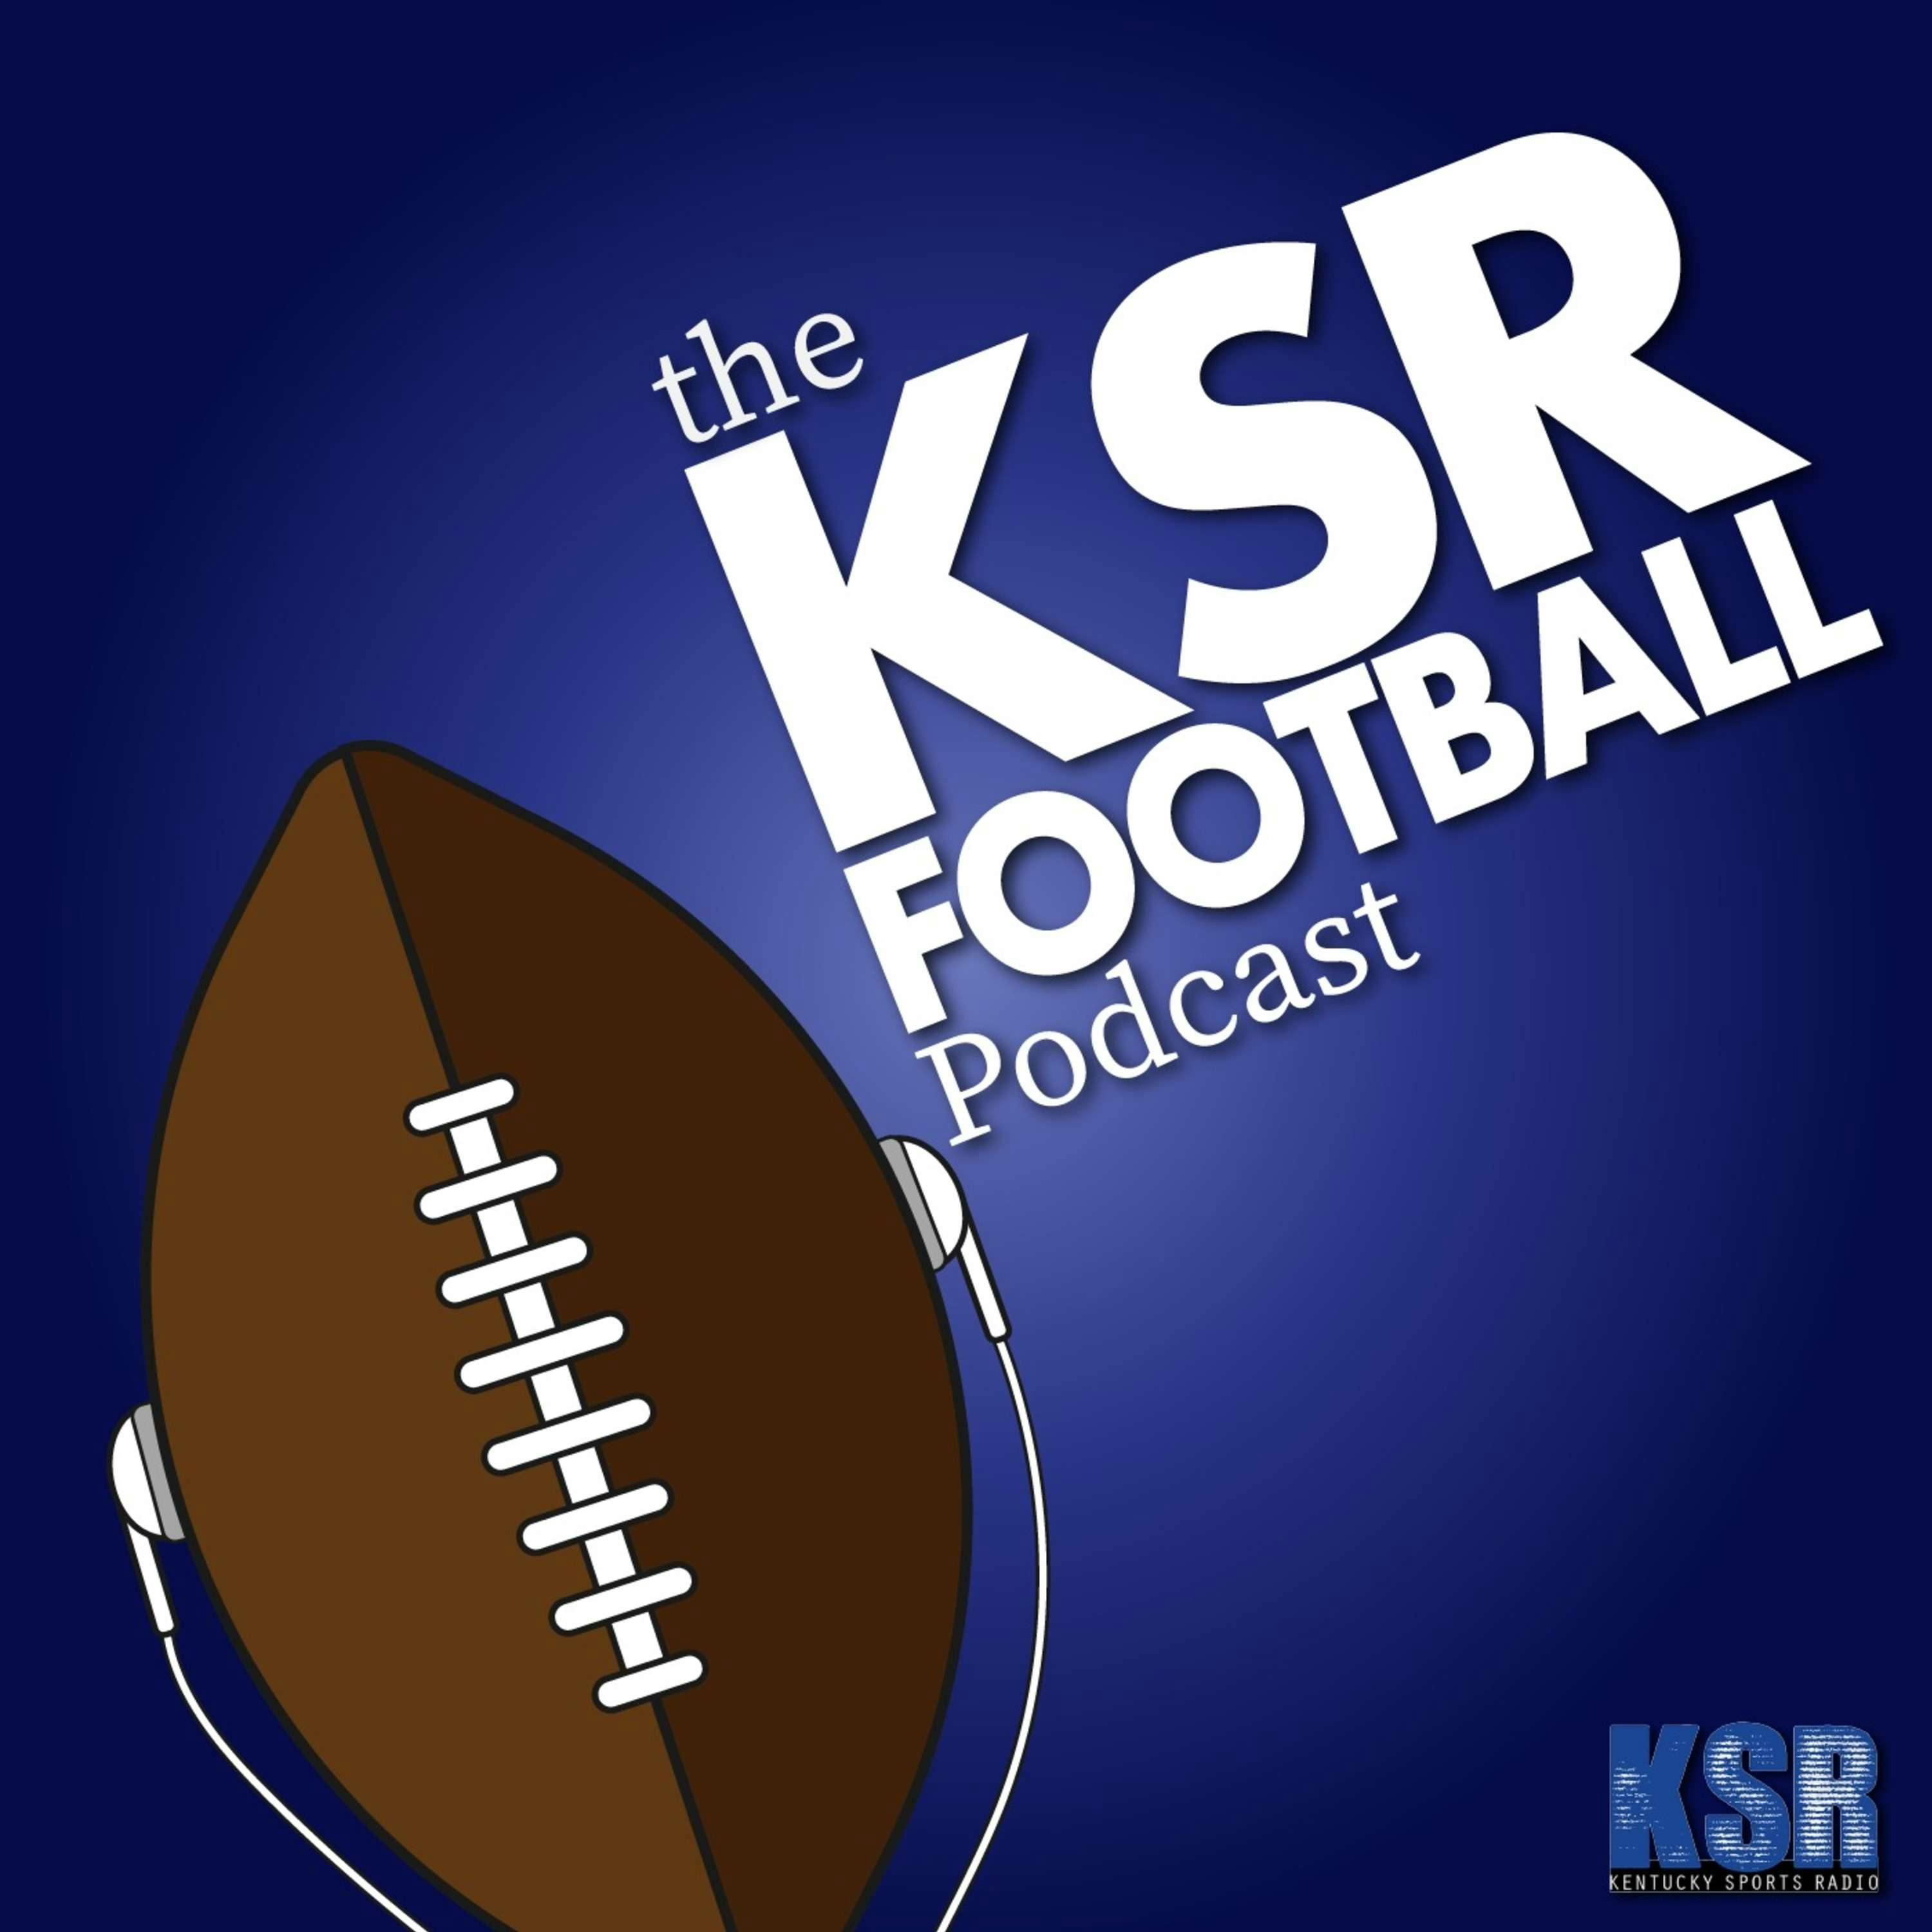 The 2019 KSR Football Podcast Awards Show